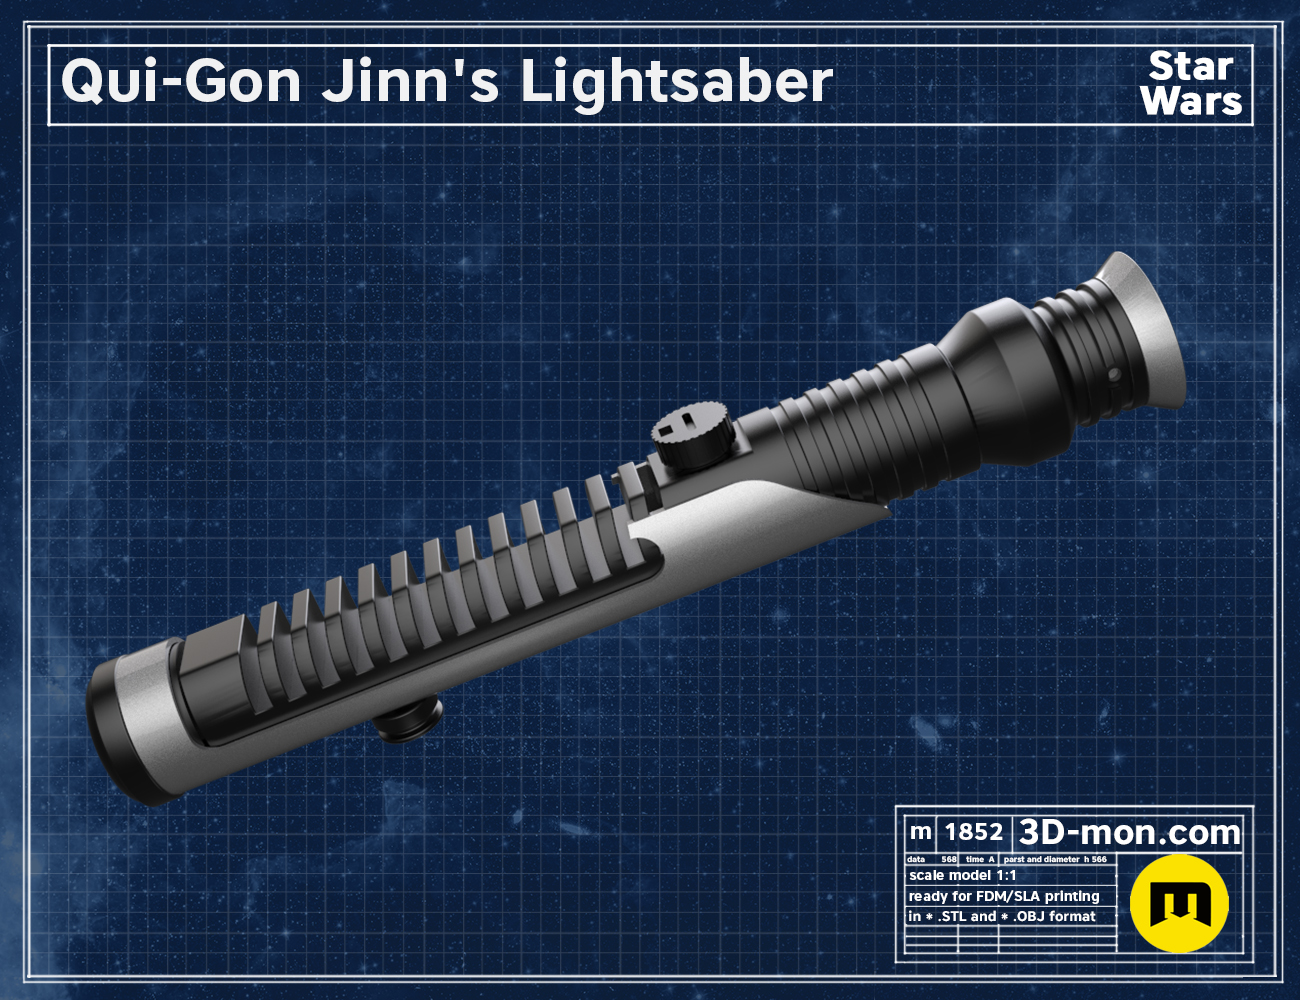 Qui-Gon Jinn's lightsaber, Star Wars Replica